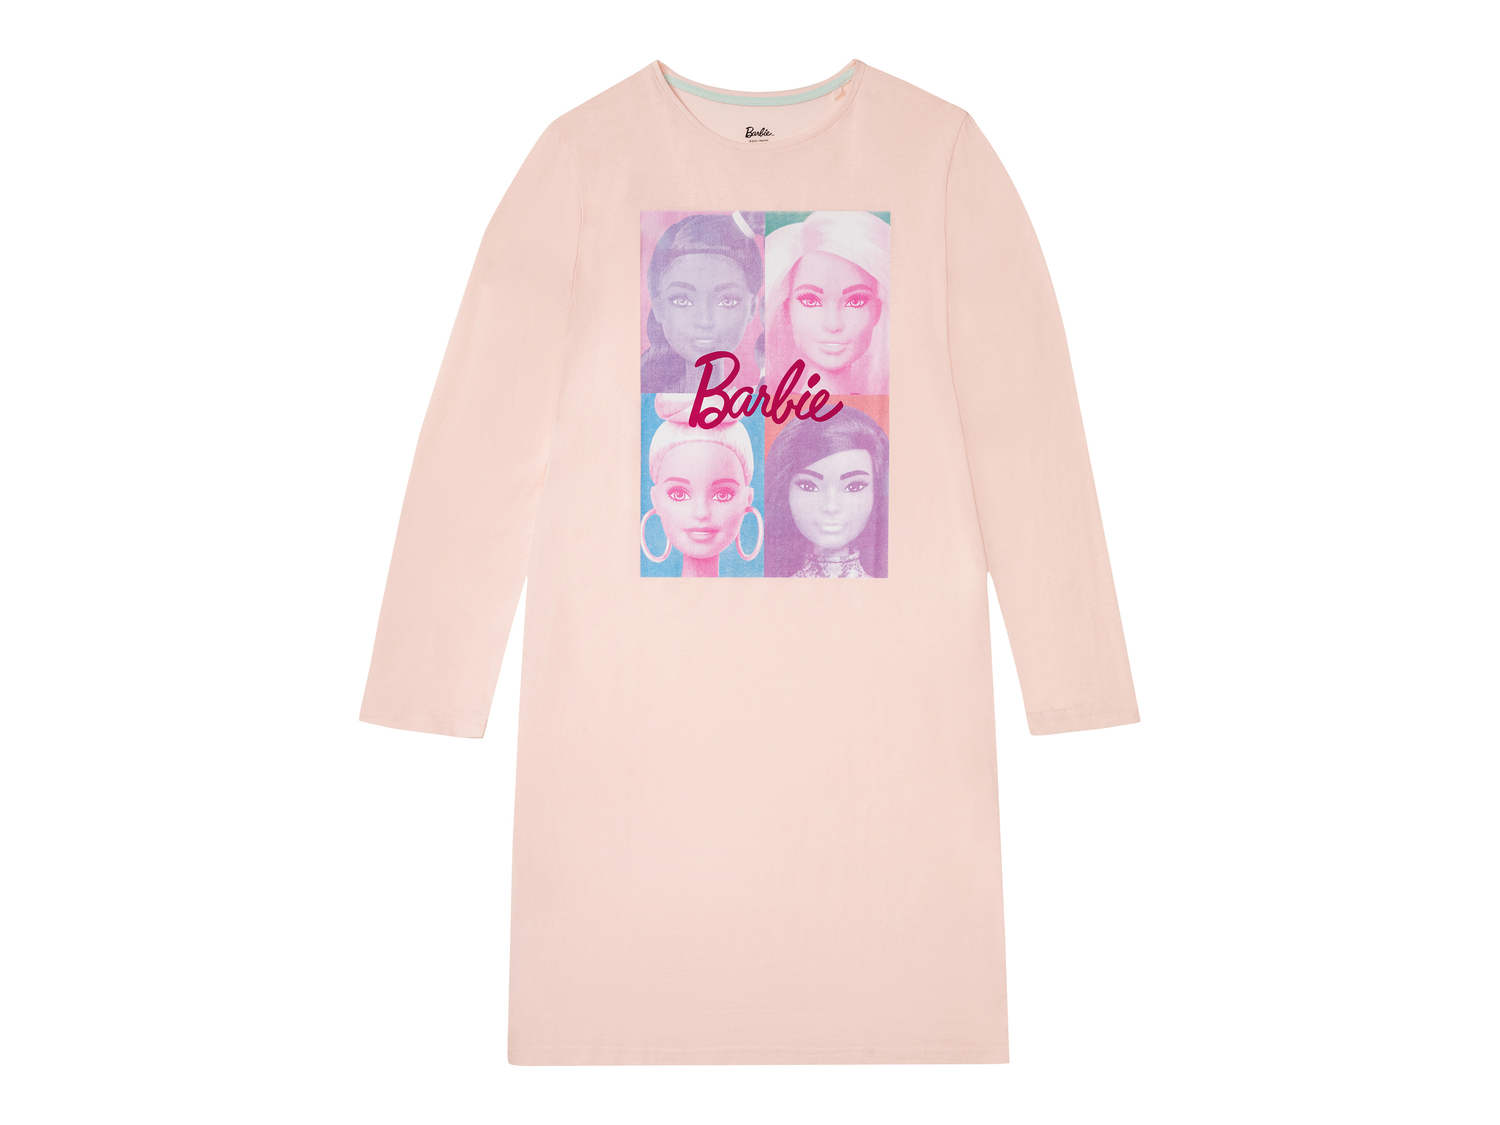 Maxi t-shirt per donna Wonder Woman, Barbie, Hello Kitty Prezzo-lidl, prezzo 7.99 ...